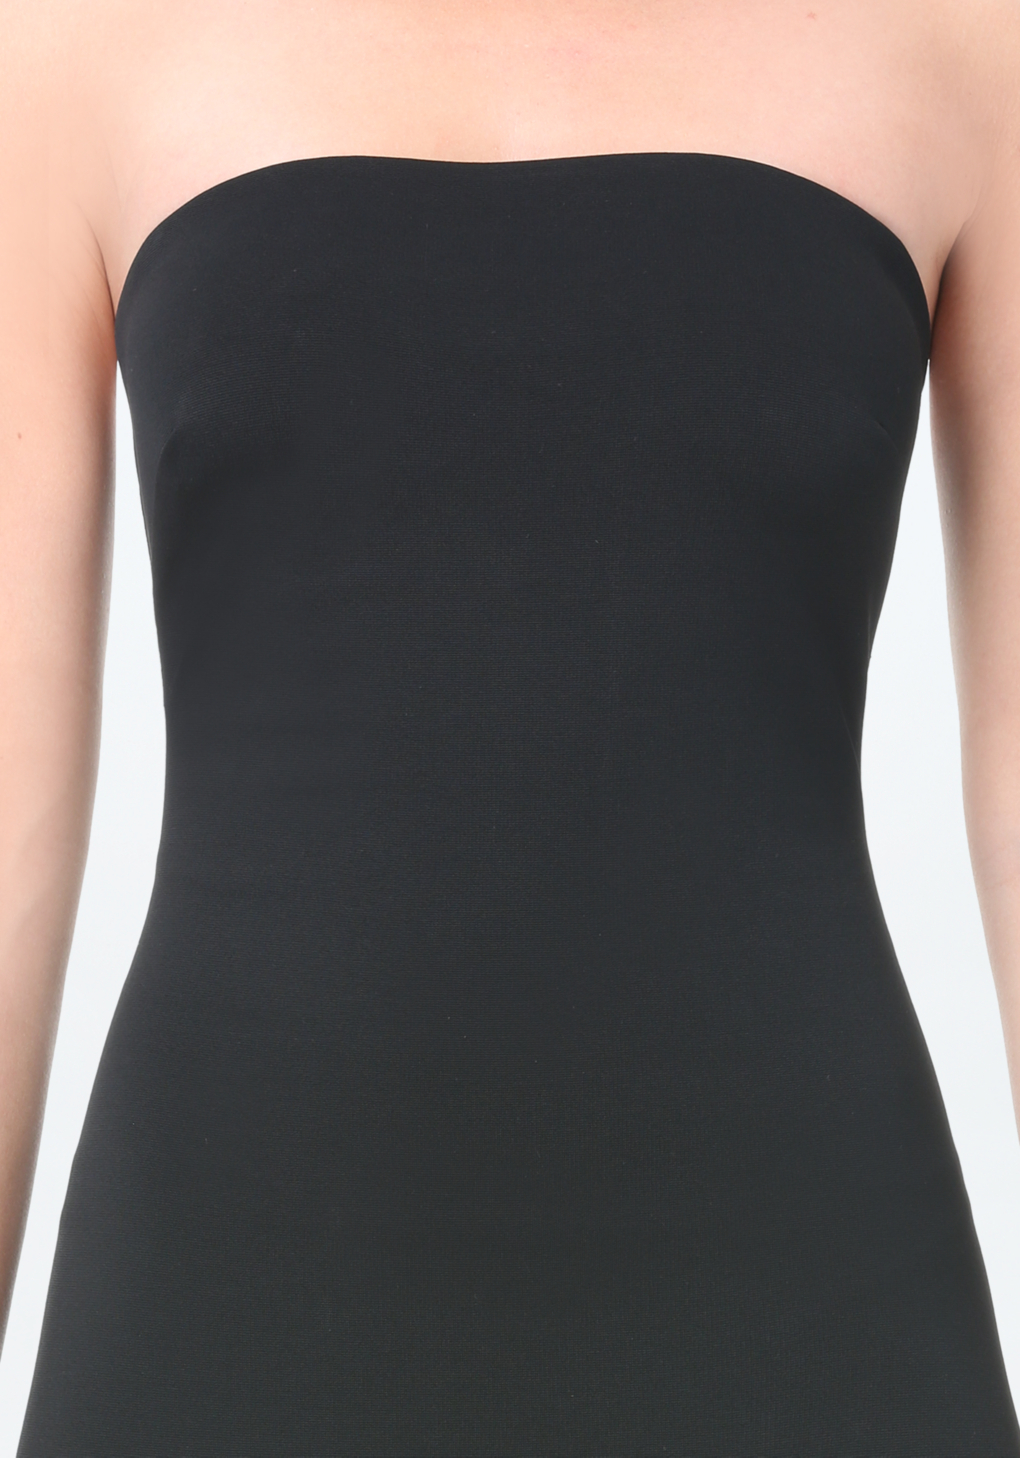 Bebe Synthetic Petite Ponte Choker Dress in Black - Lyst